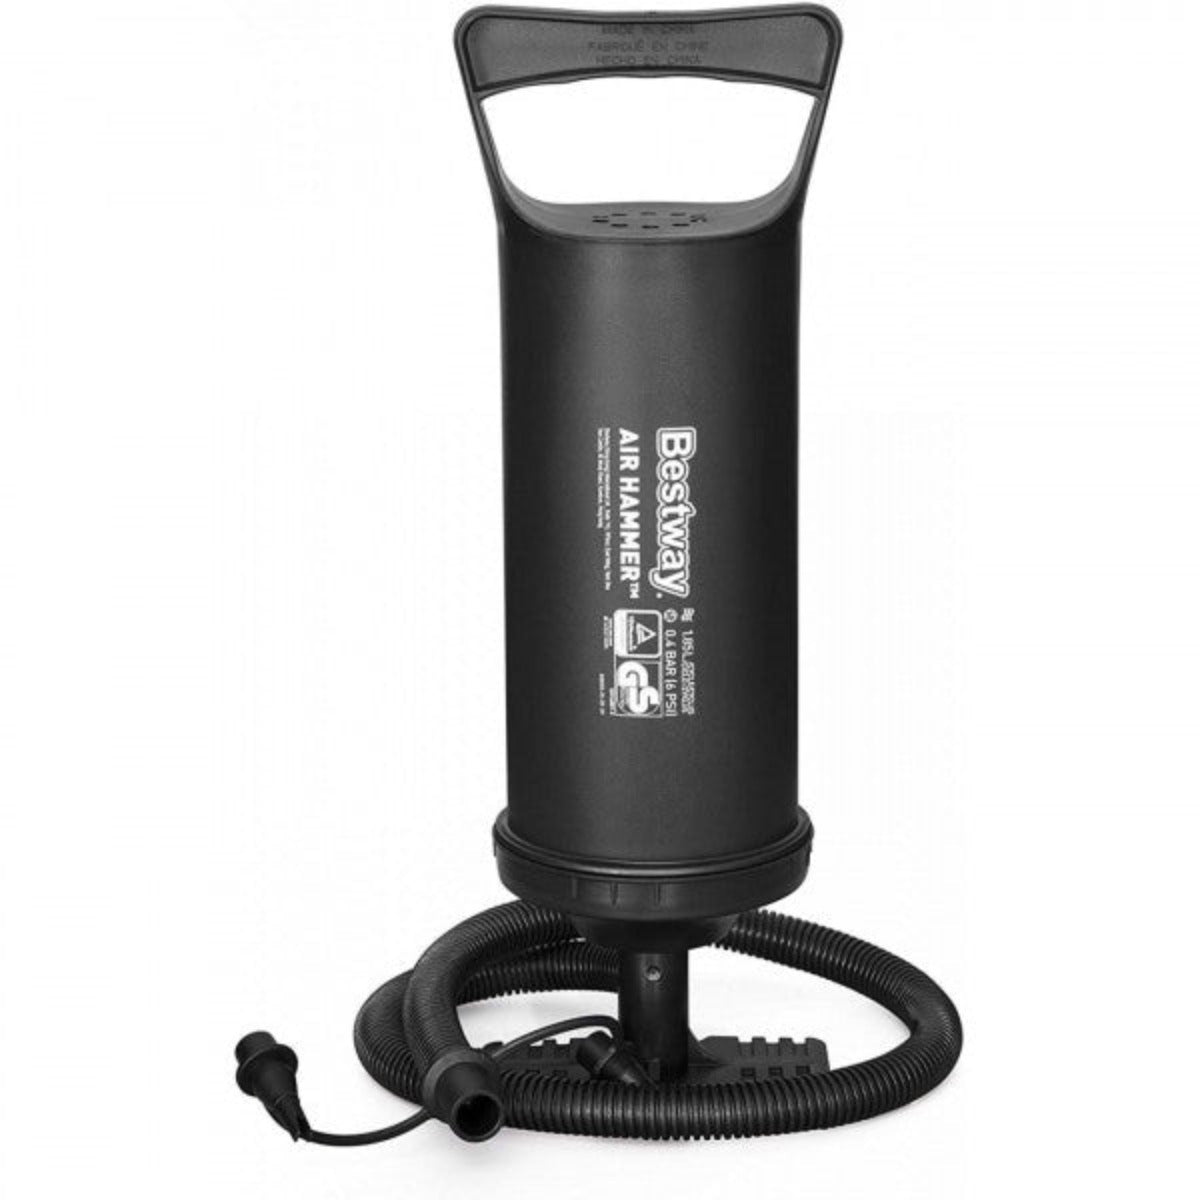 Pompa di gonfiaggio manuale per materassini Bestway 62003 Air Hammer 36 cm